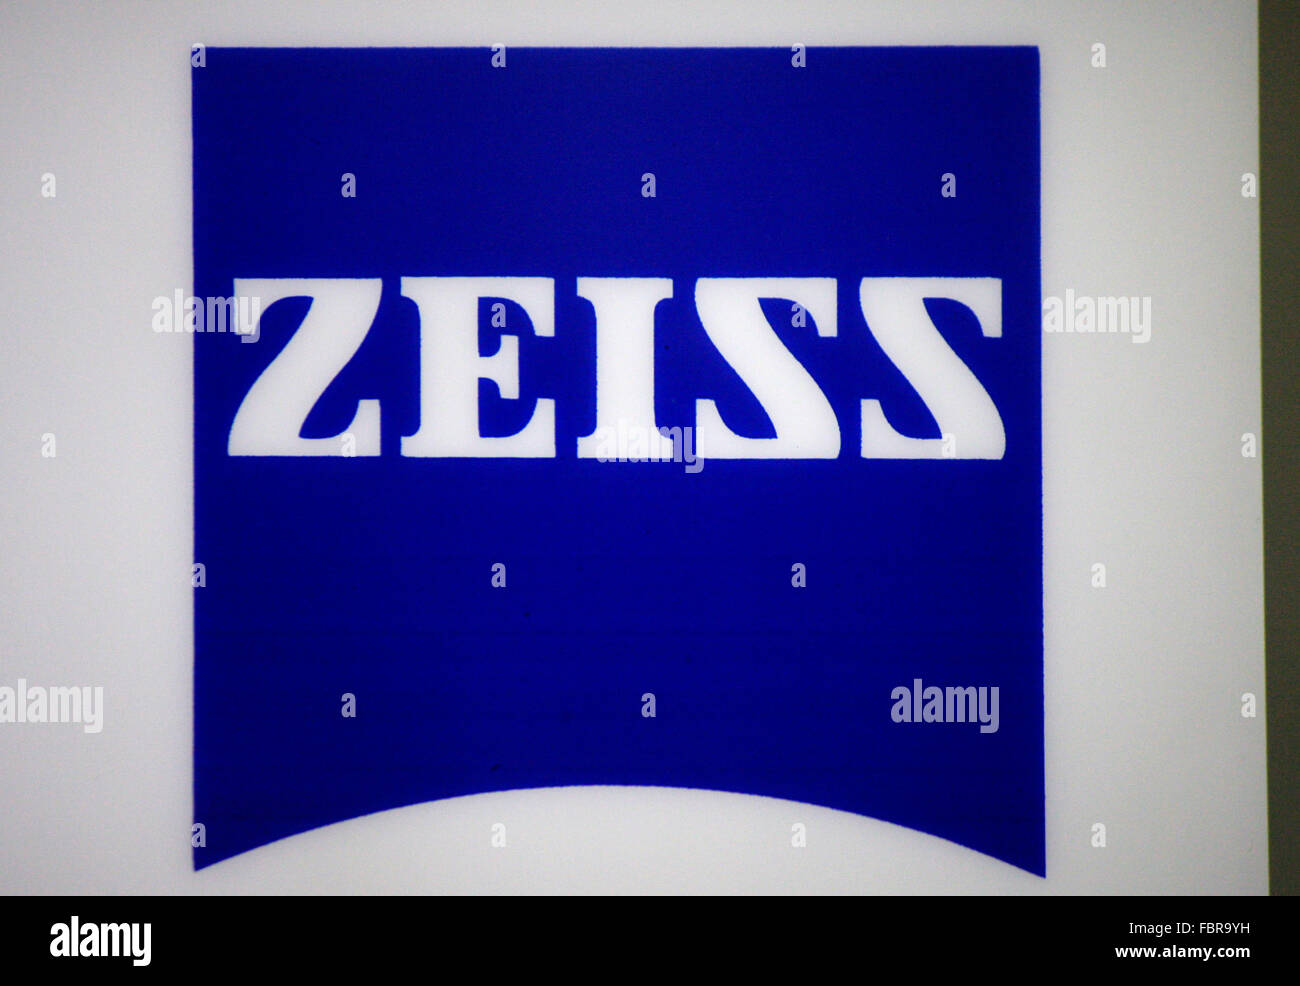 Markenname: "Zeiss", Berlin. Stockfoto